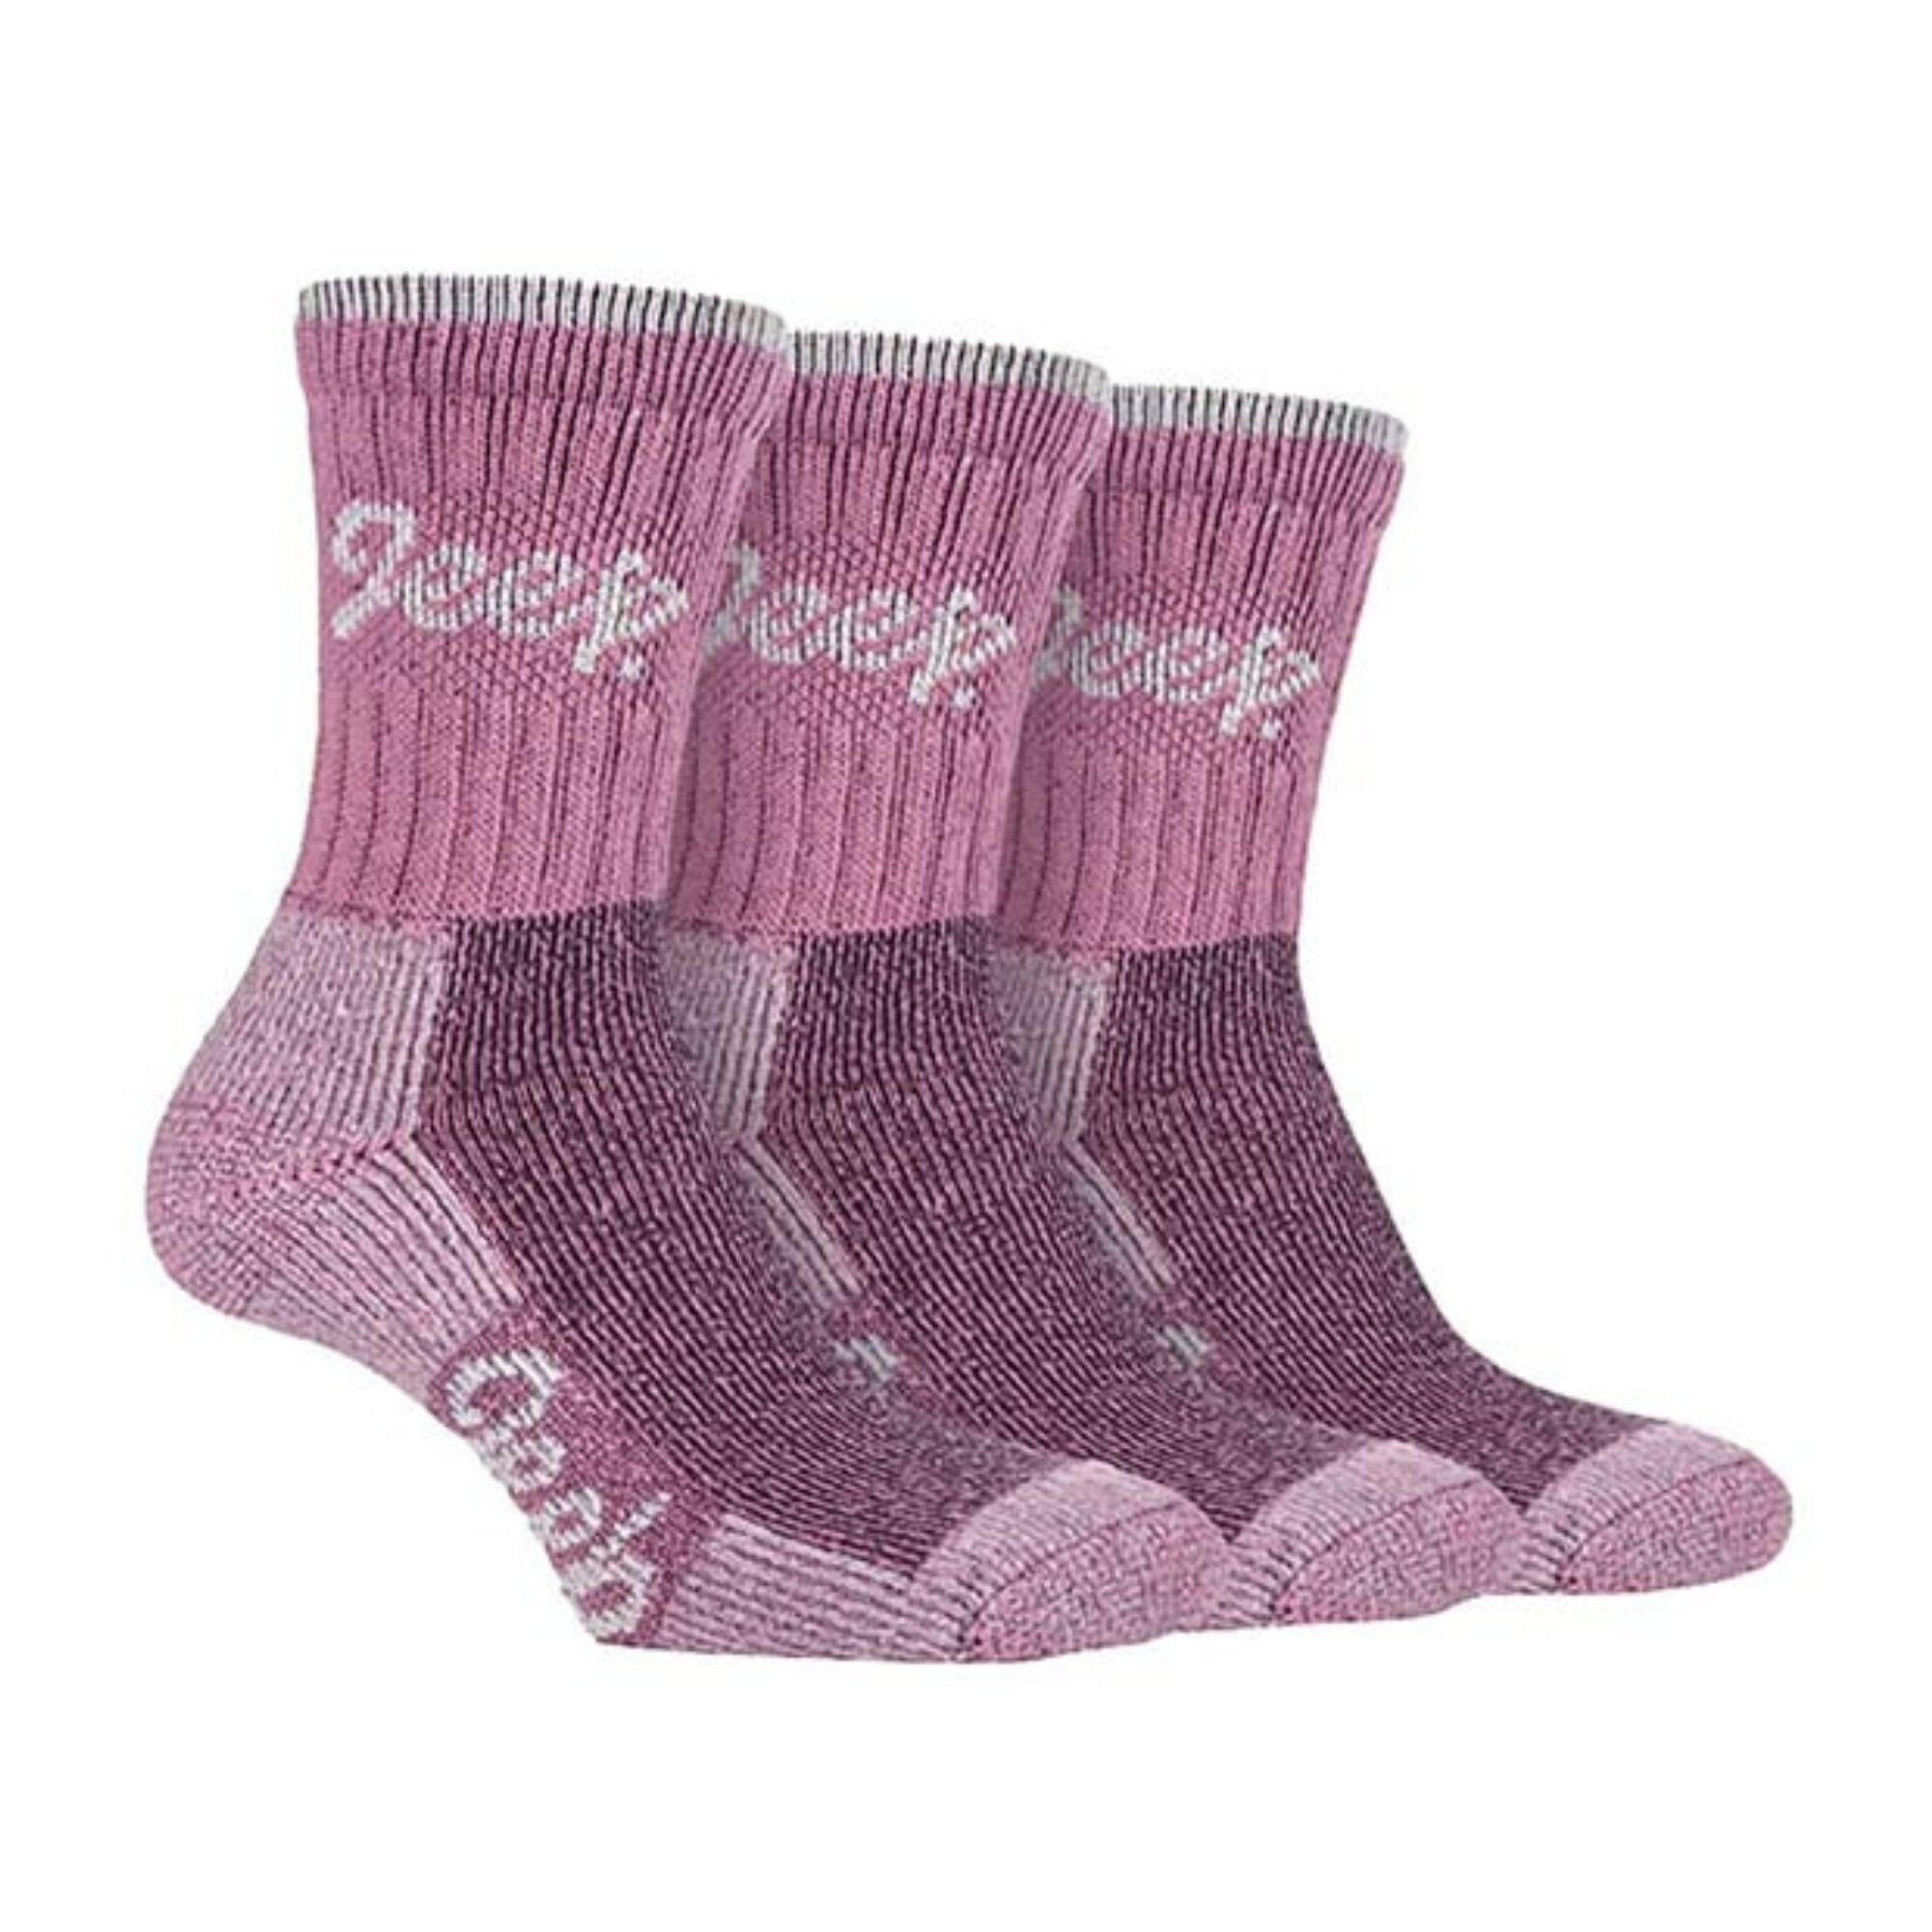 3 Pairs Cotton Cushioned Walking Hiking Socks for Ladies 1/3